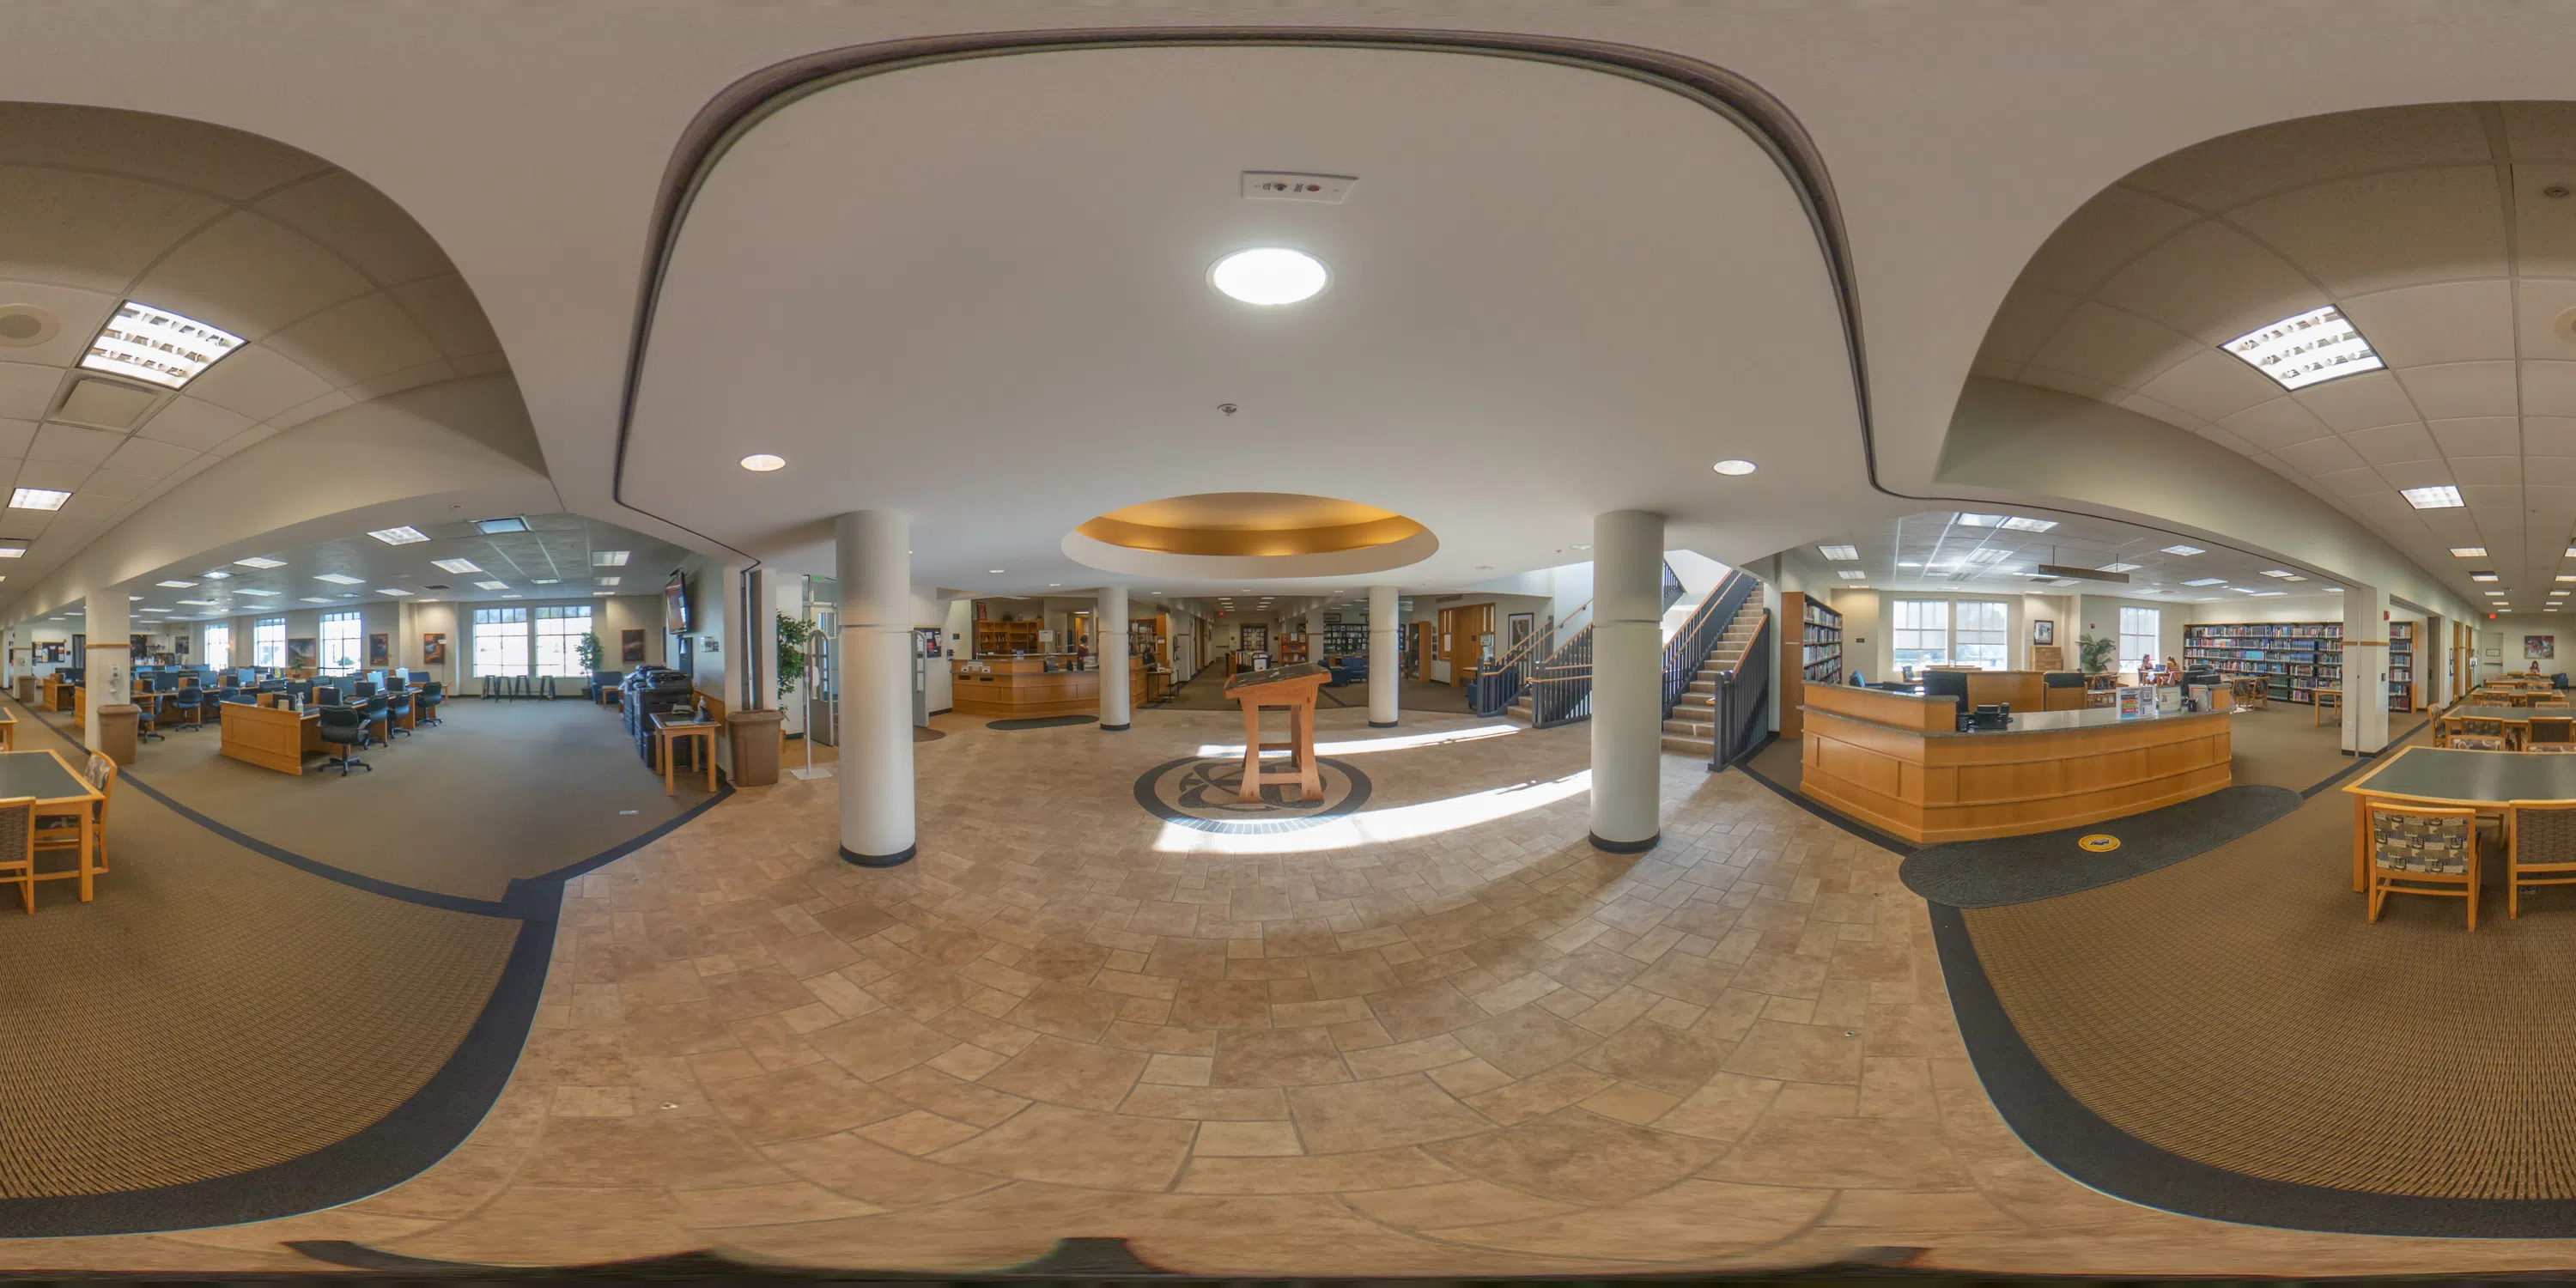 Panorama of library interior